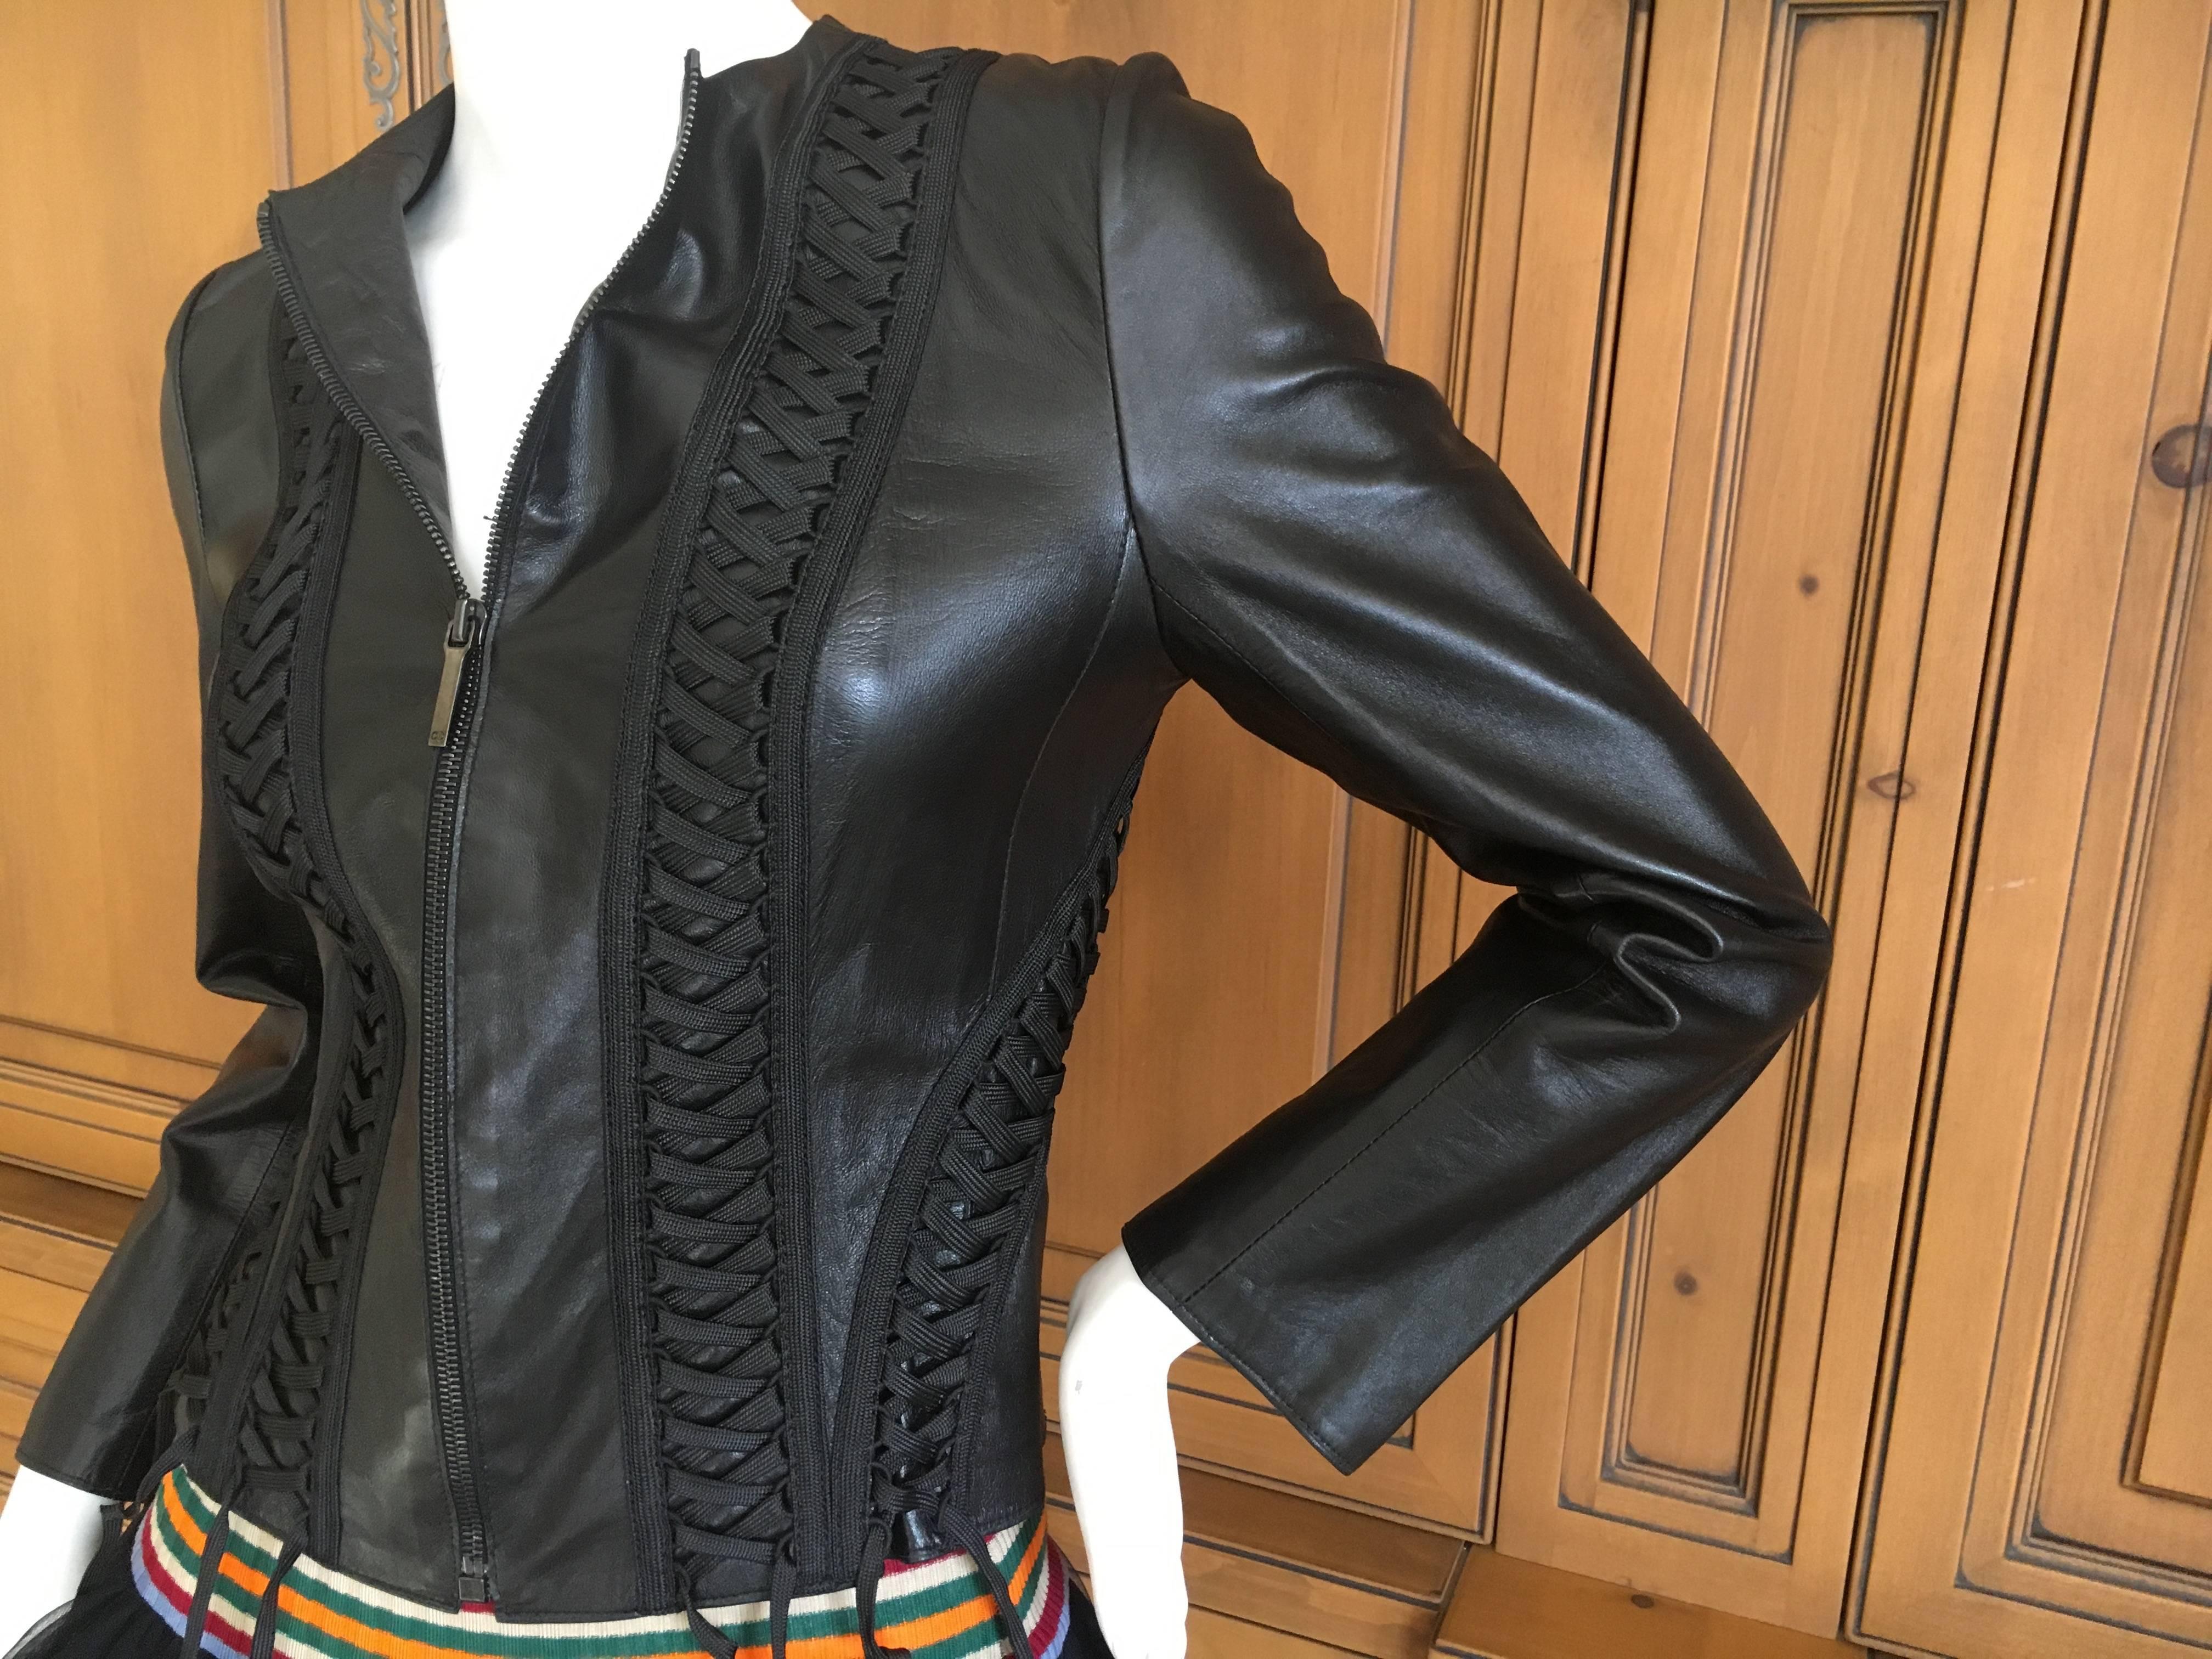 Women's Christian Dior Black Lambskin Leather Corset Laced Bondage Jacket by Galliano